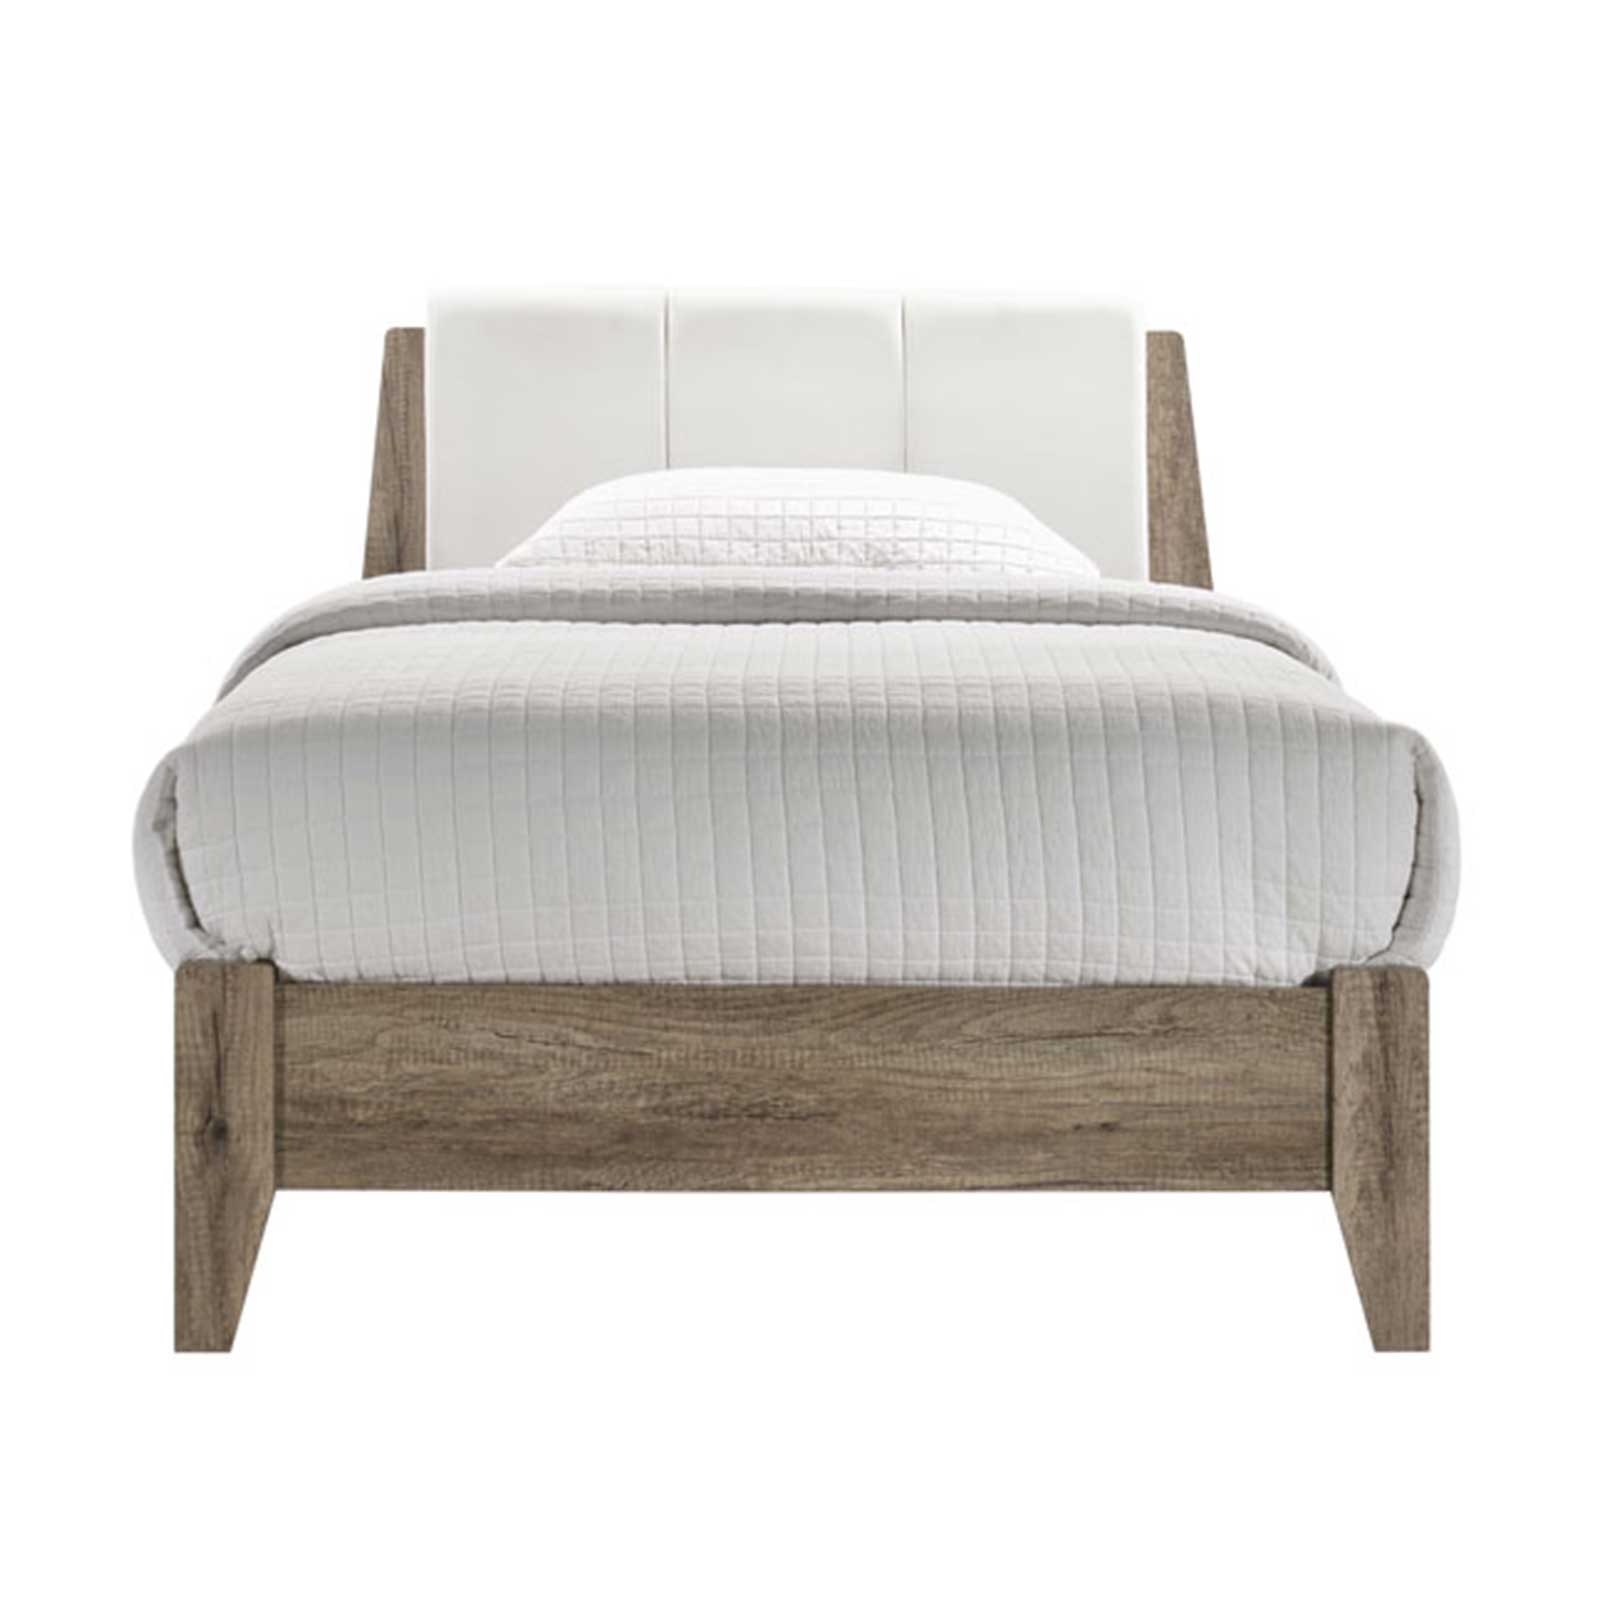 Nobu Wooden Bed Frame Australia, Leather And Wood Bed Frame